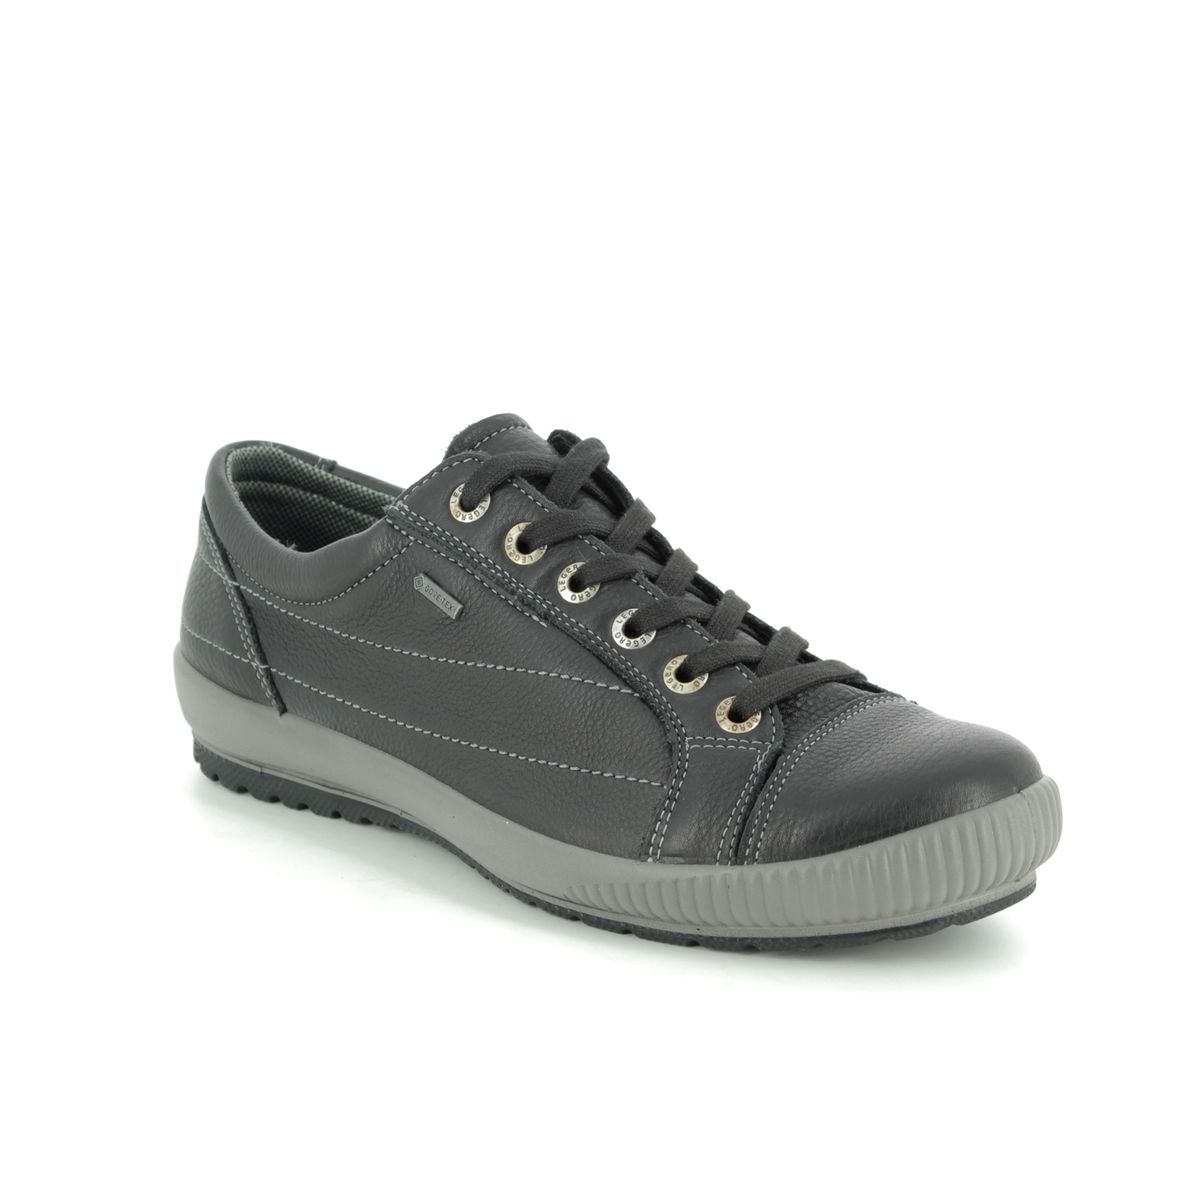 Legero Tanaro 4.0 Gtx 00613-02 Black leather lacing shoes